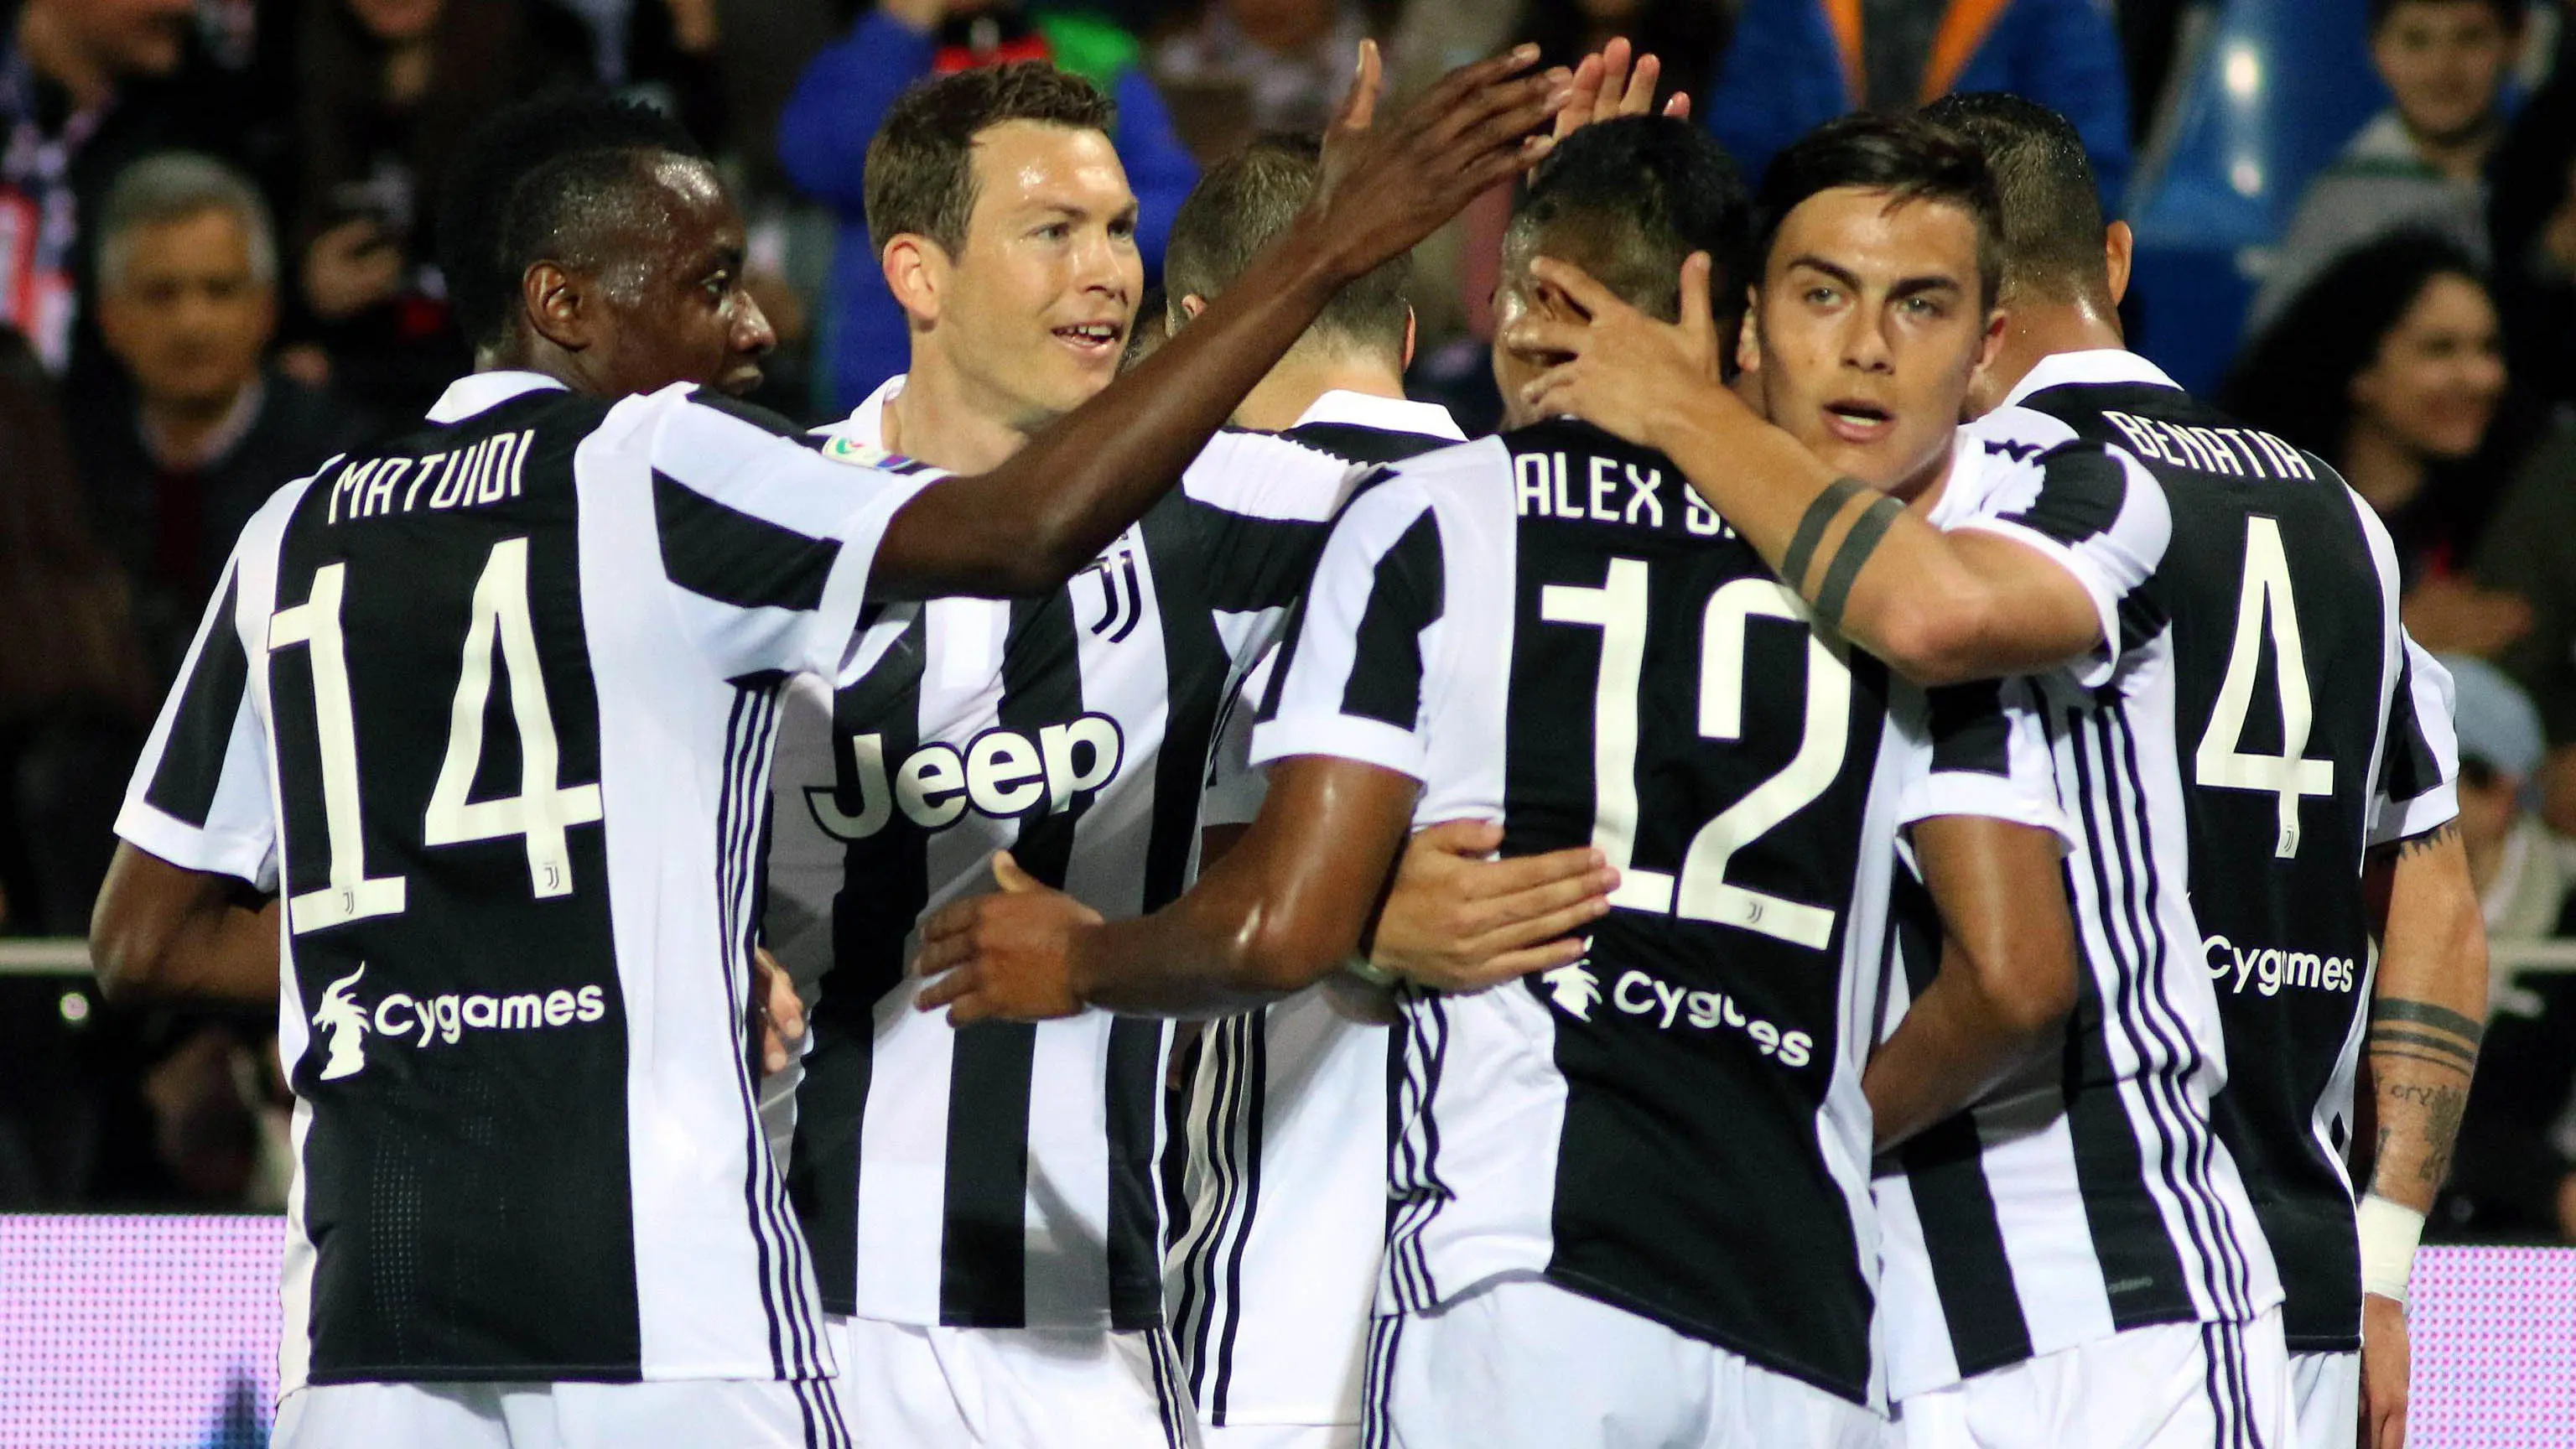 Para pemain Juventus merayakan gol yang dicetak oleh Alex Sandro ke gawang Crotone pada laga Serie A di Stadion Ezio Scida, Kamis (19/4/2018). Juventus ditahan imbang 1-1 oleh Crotone. (AP/Albano Angilletta)